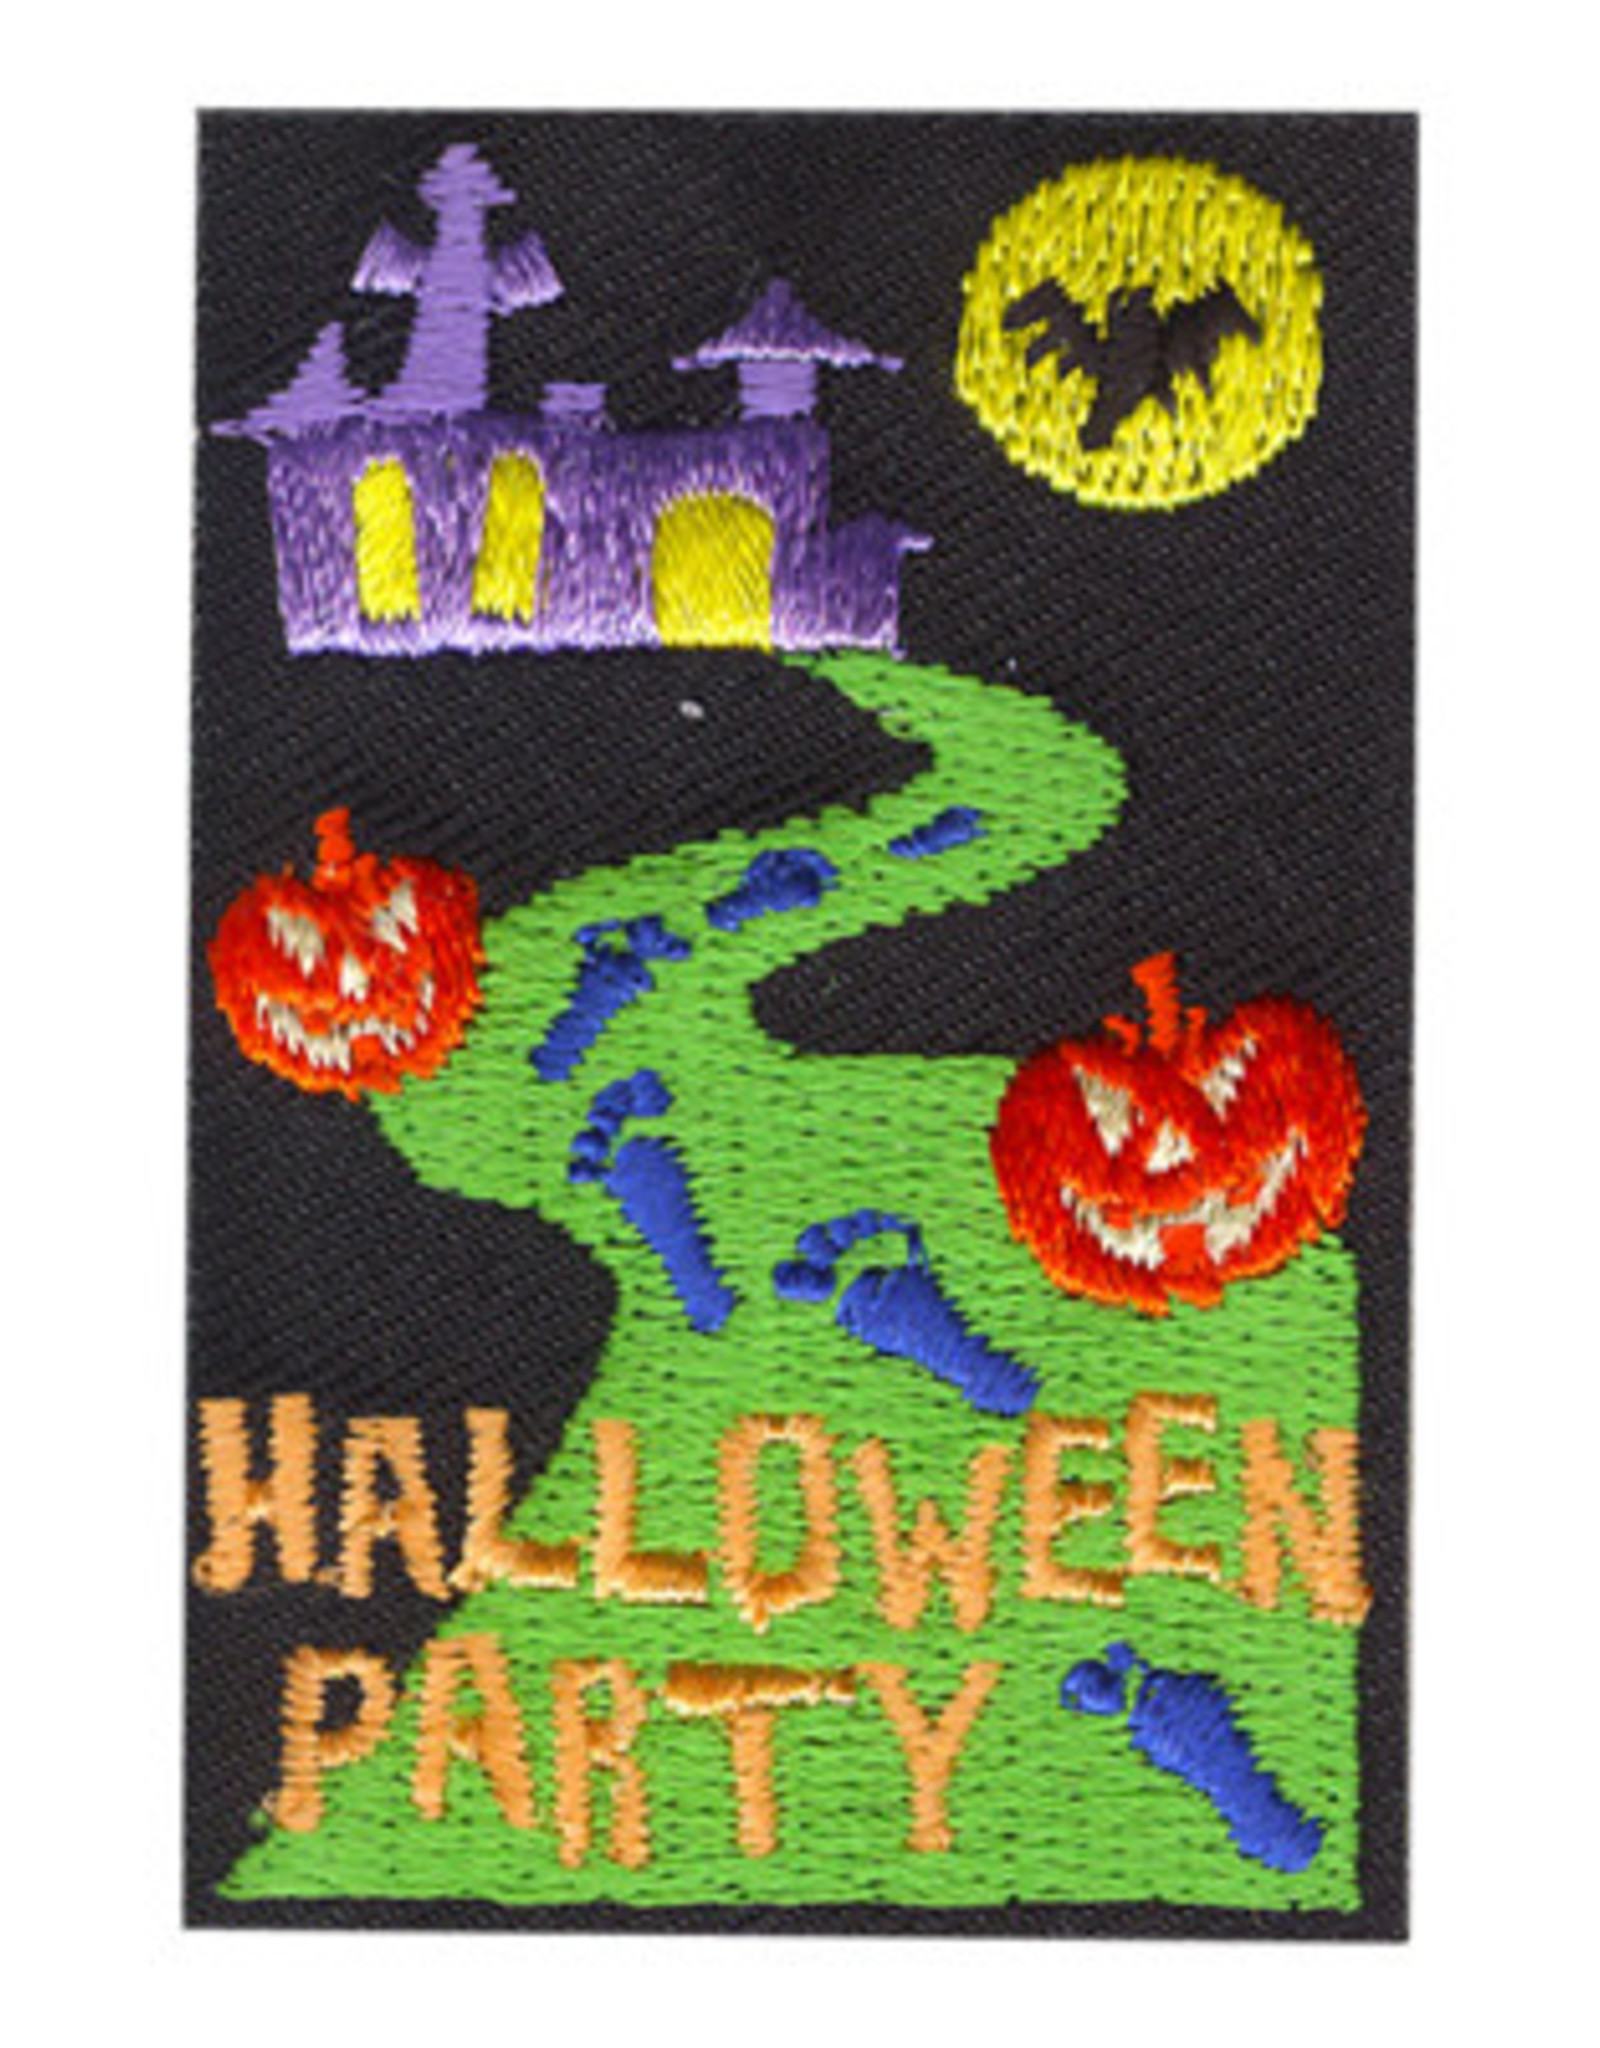 Advantage Emblem & Screen Prnt Halloween Party Fun Patch